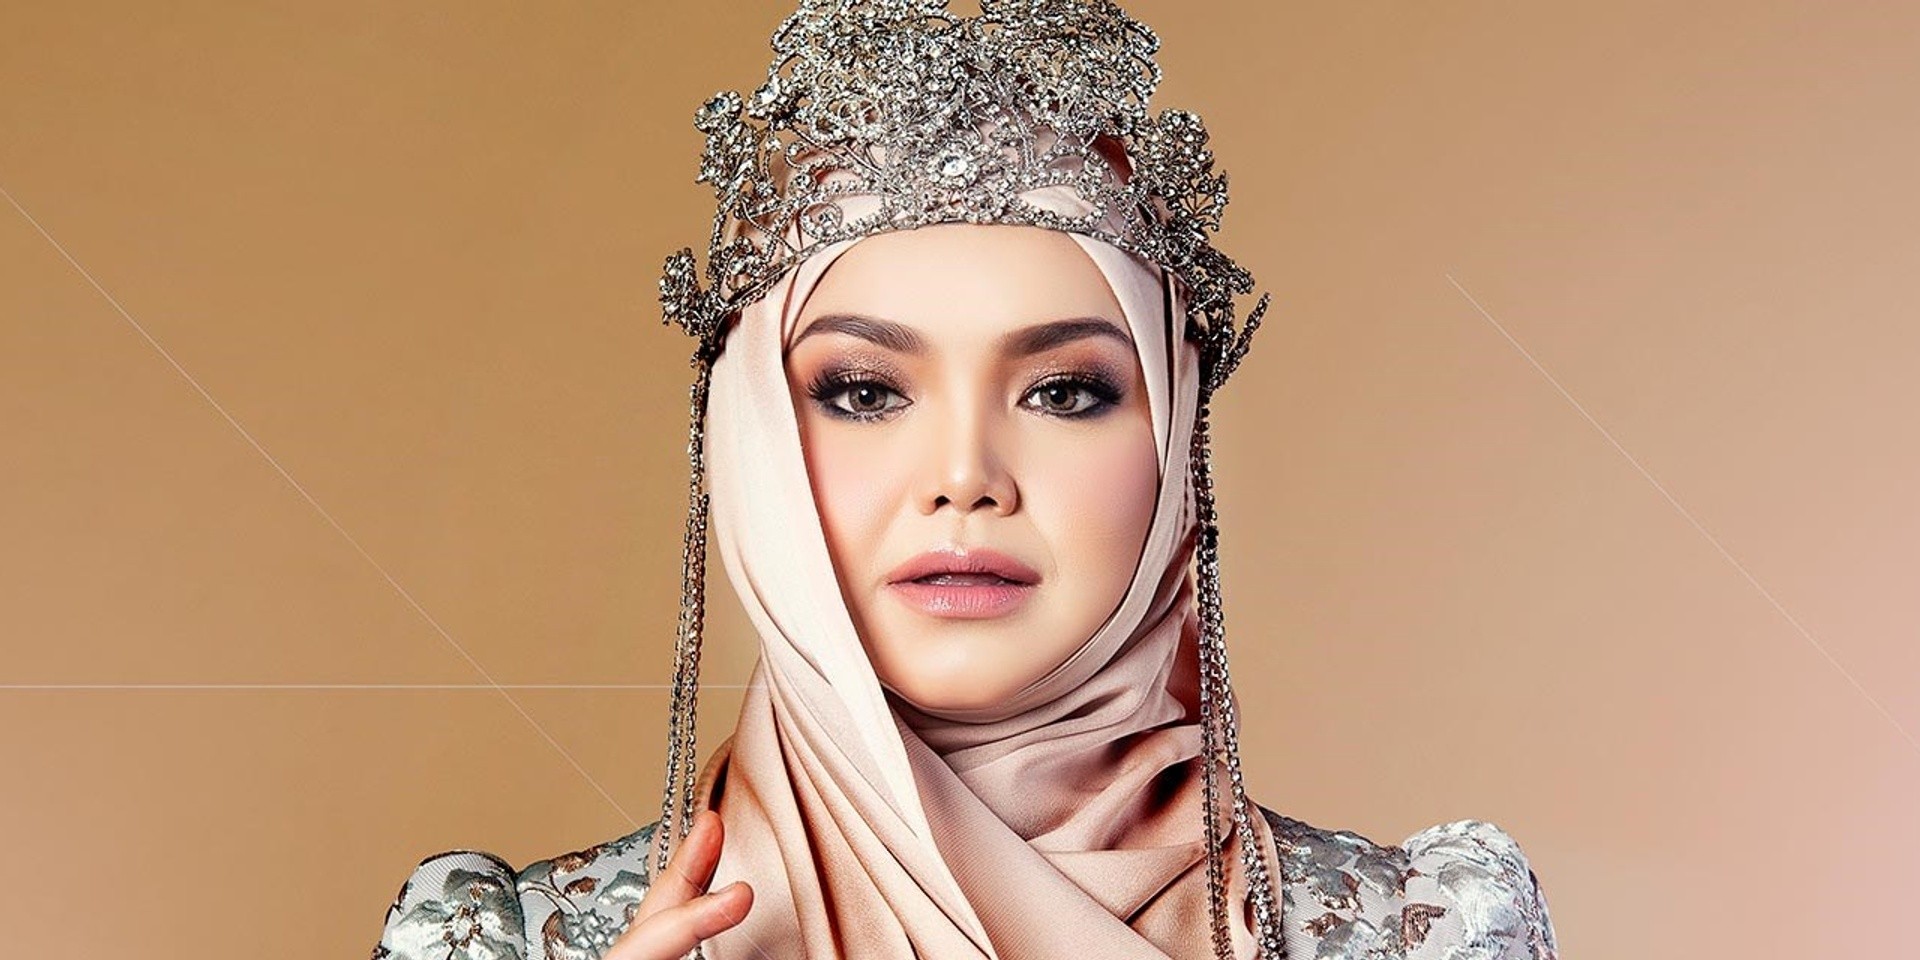 Siti Nurhaliza to perform in Adelaide, Australia in October